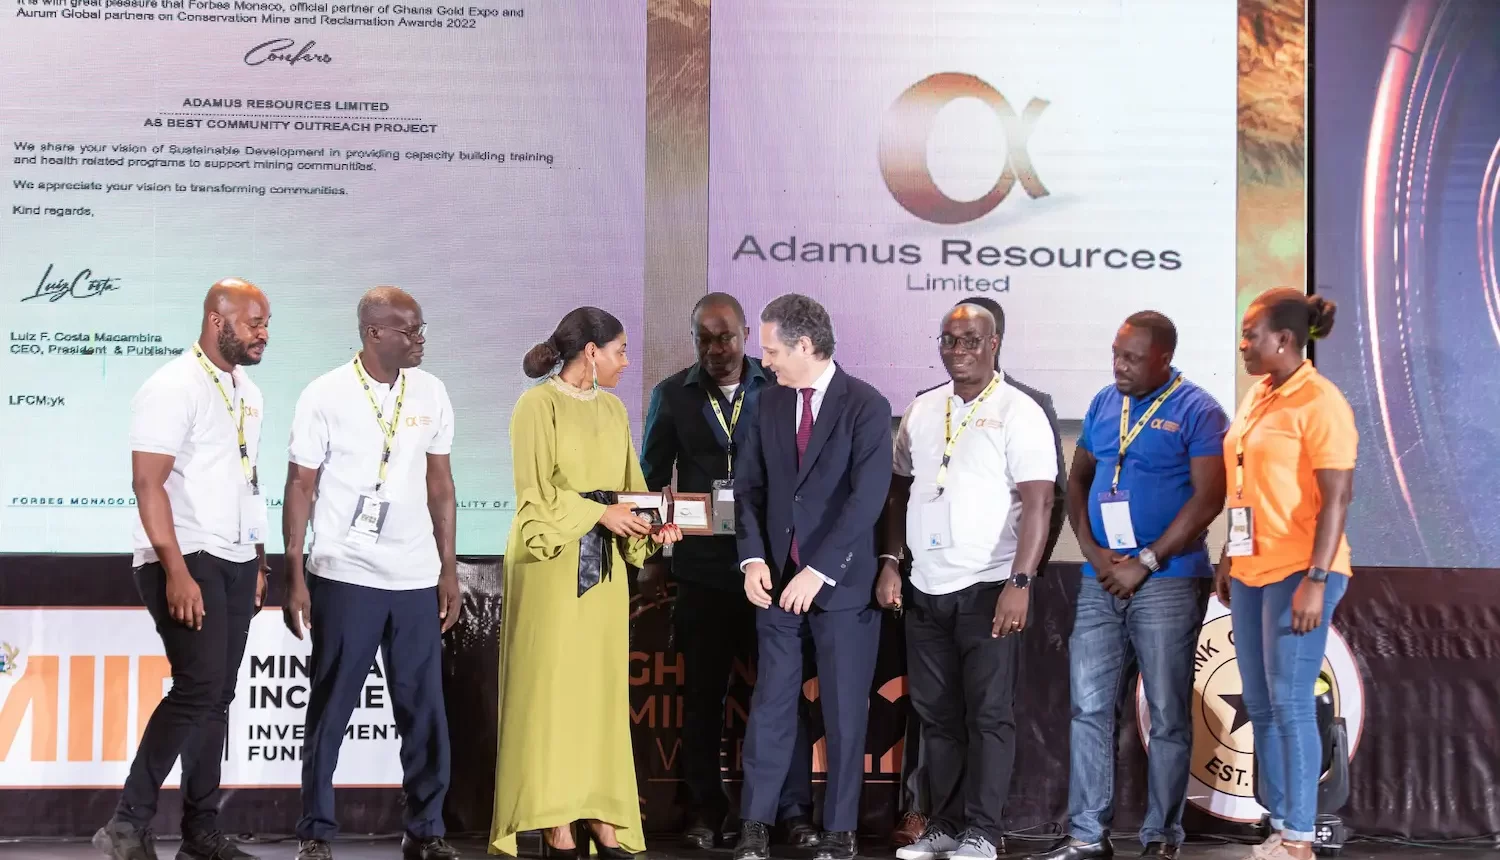 Adamus Resources wins best community outreach project award - Nguvu Mining